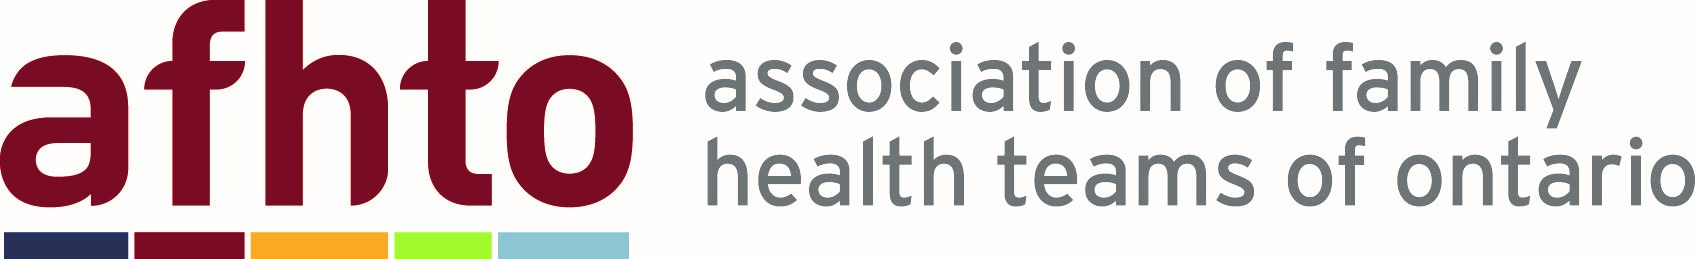 AFHTO: Association of family health teams of Ontario